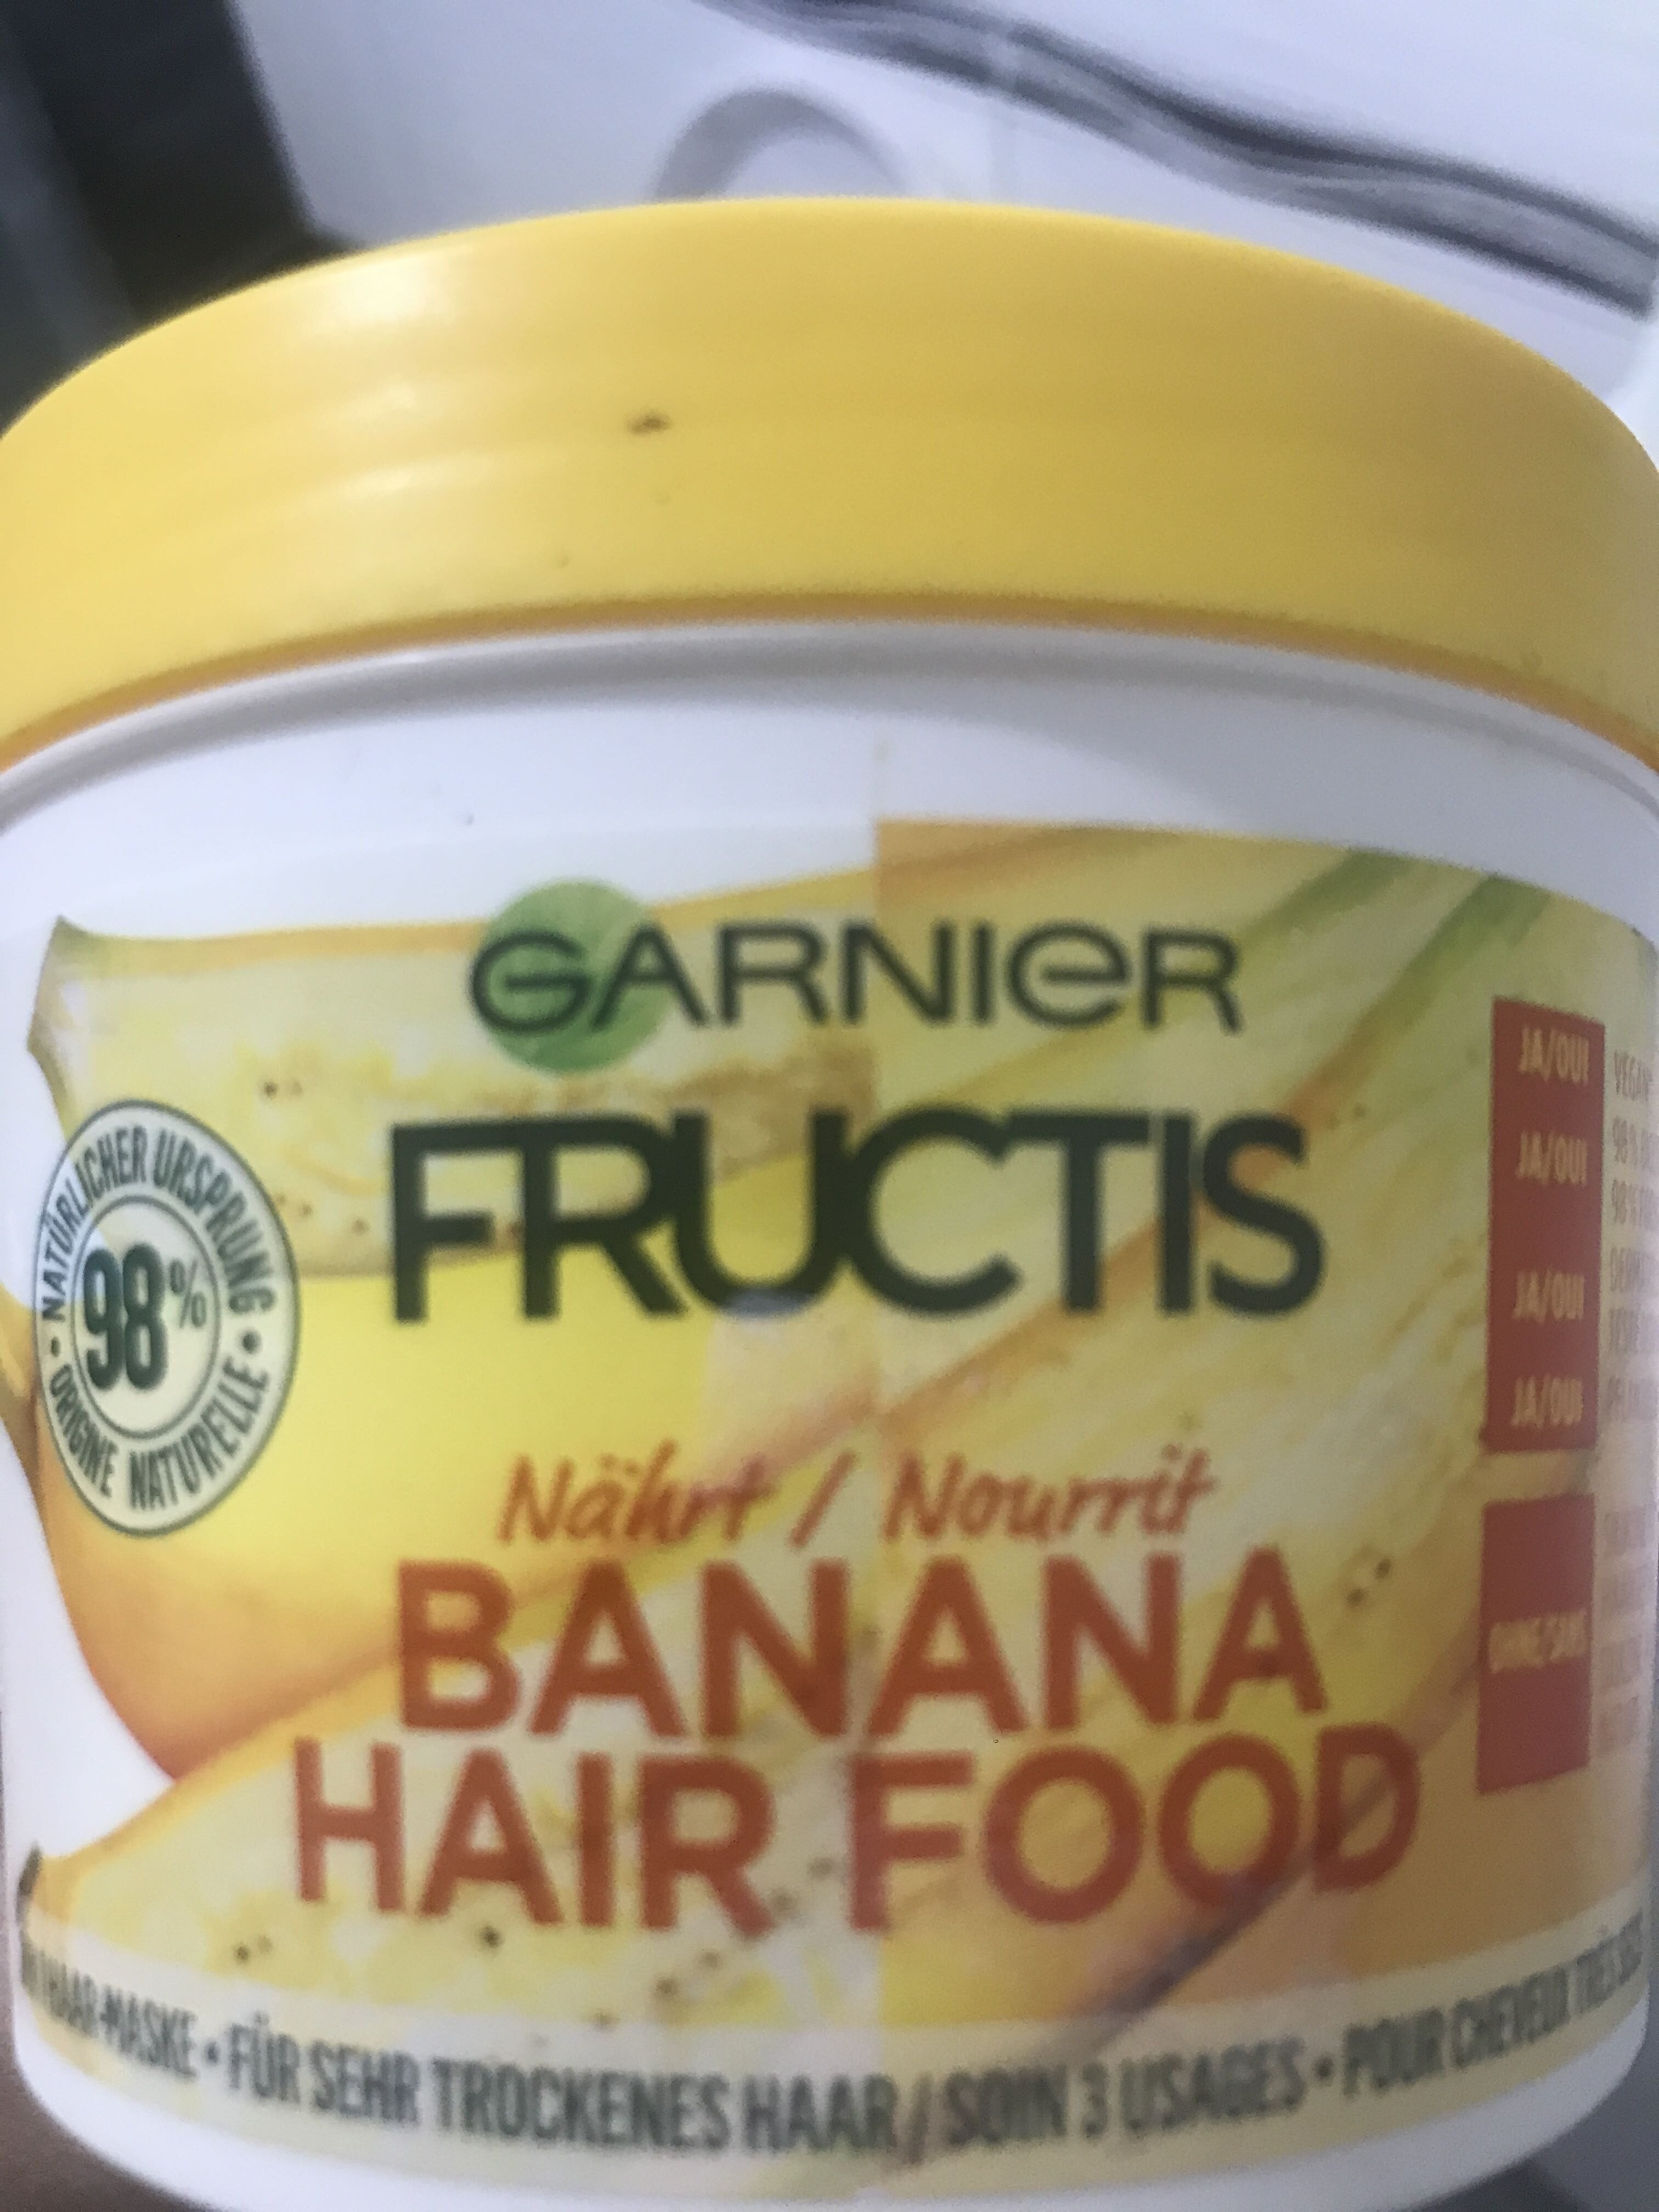 FRUCTIS - Banana Hair Food - Tuote - en